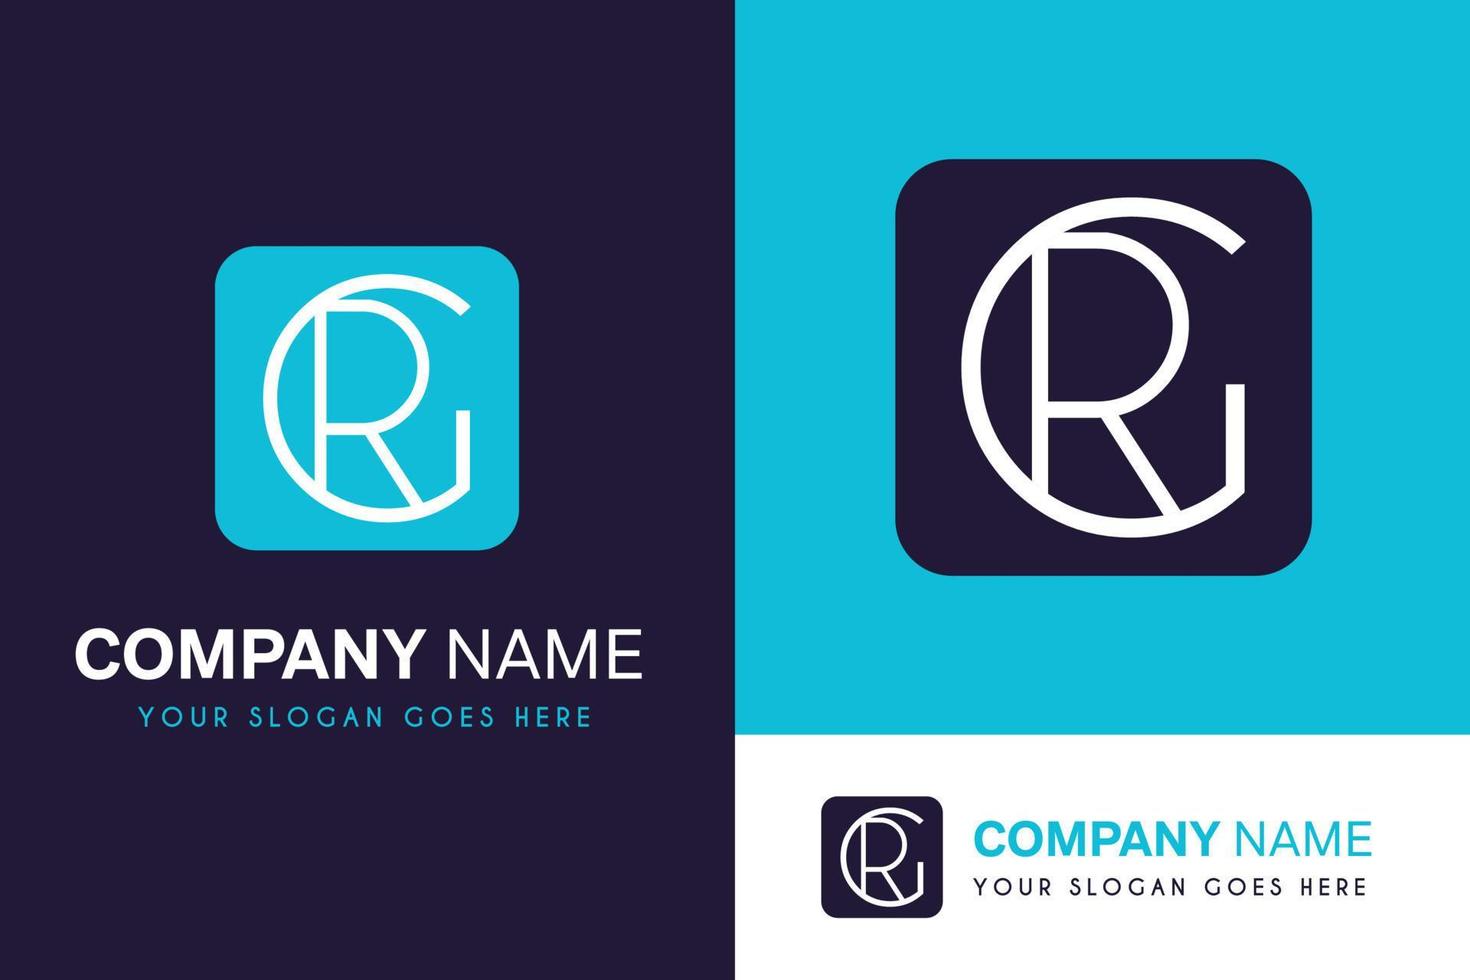 branding Identität korporativ ein Logo Vektor Design Vorlage